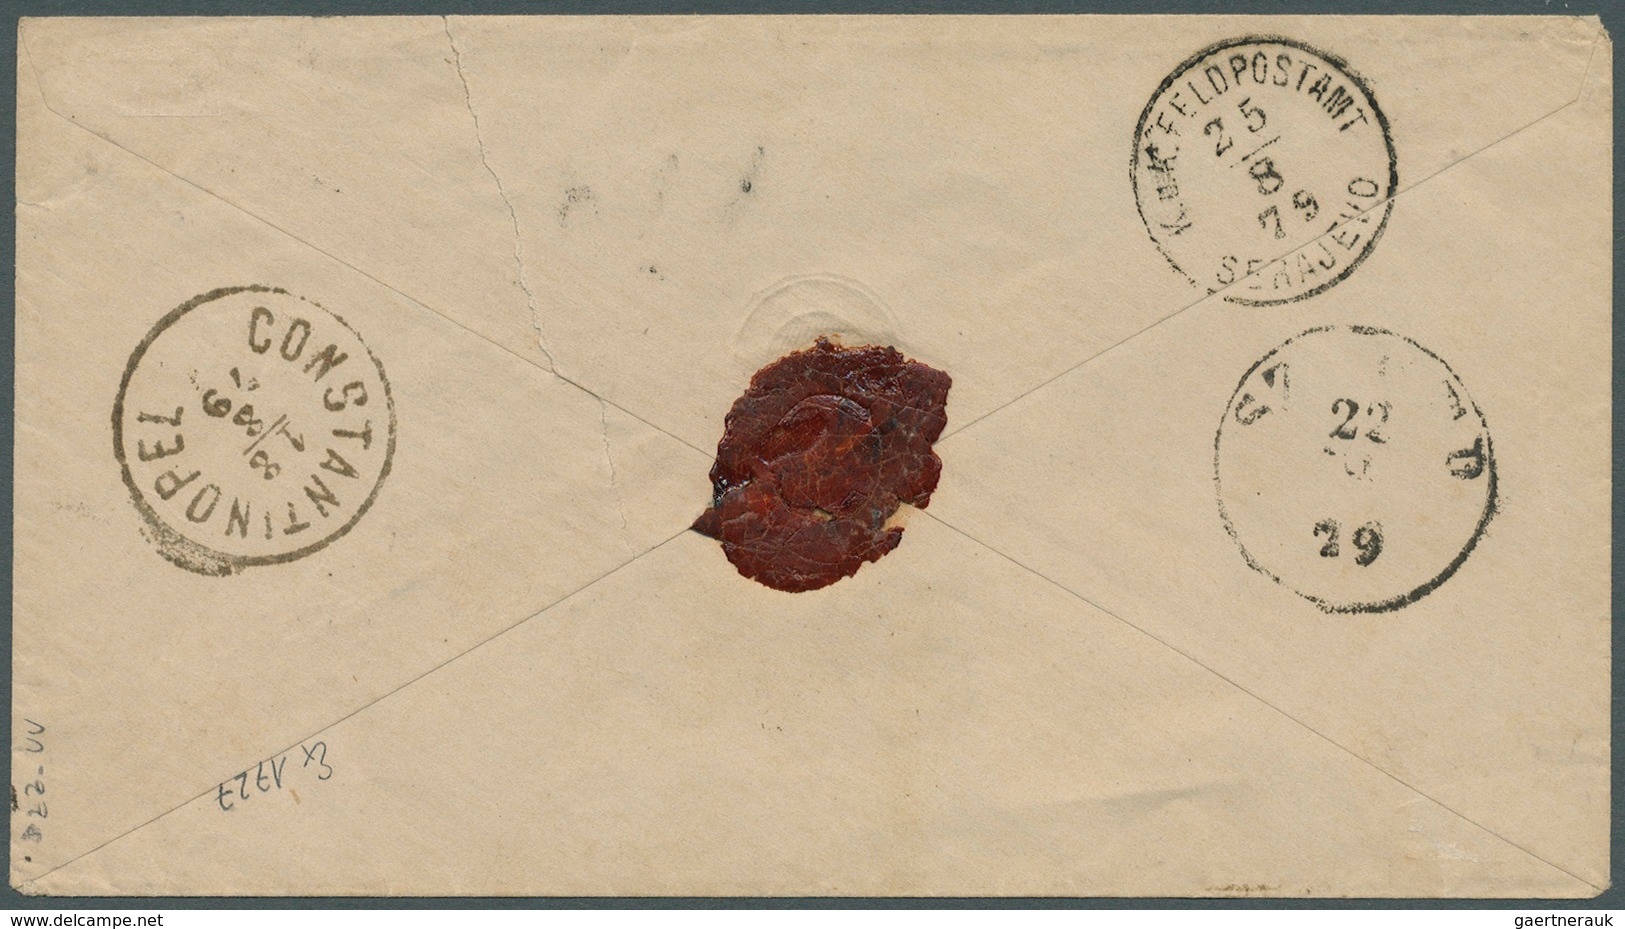 Bosnien Und Herzegowina: 1879, Incoming Mail From Bulgaria: Austrian Levant 10so. Blue, Single Frank - Bosnia And Herzegovina